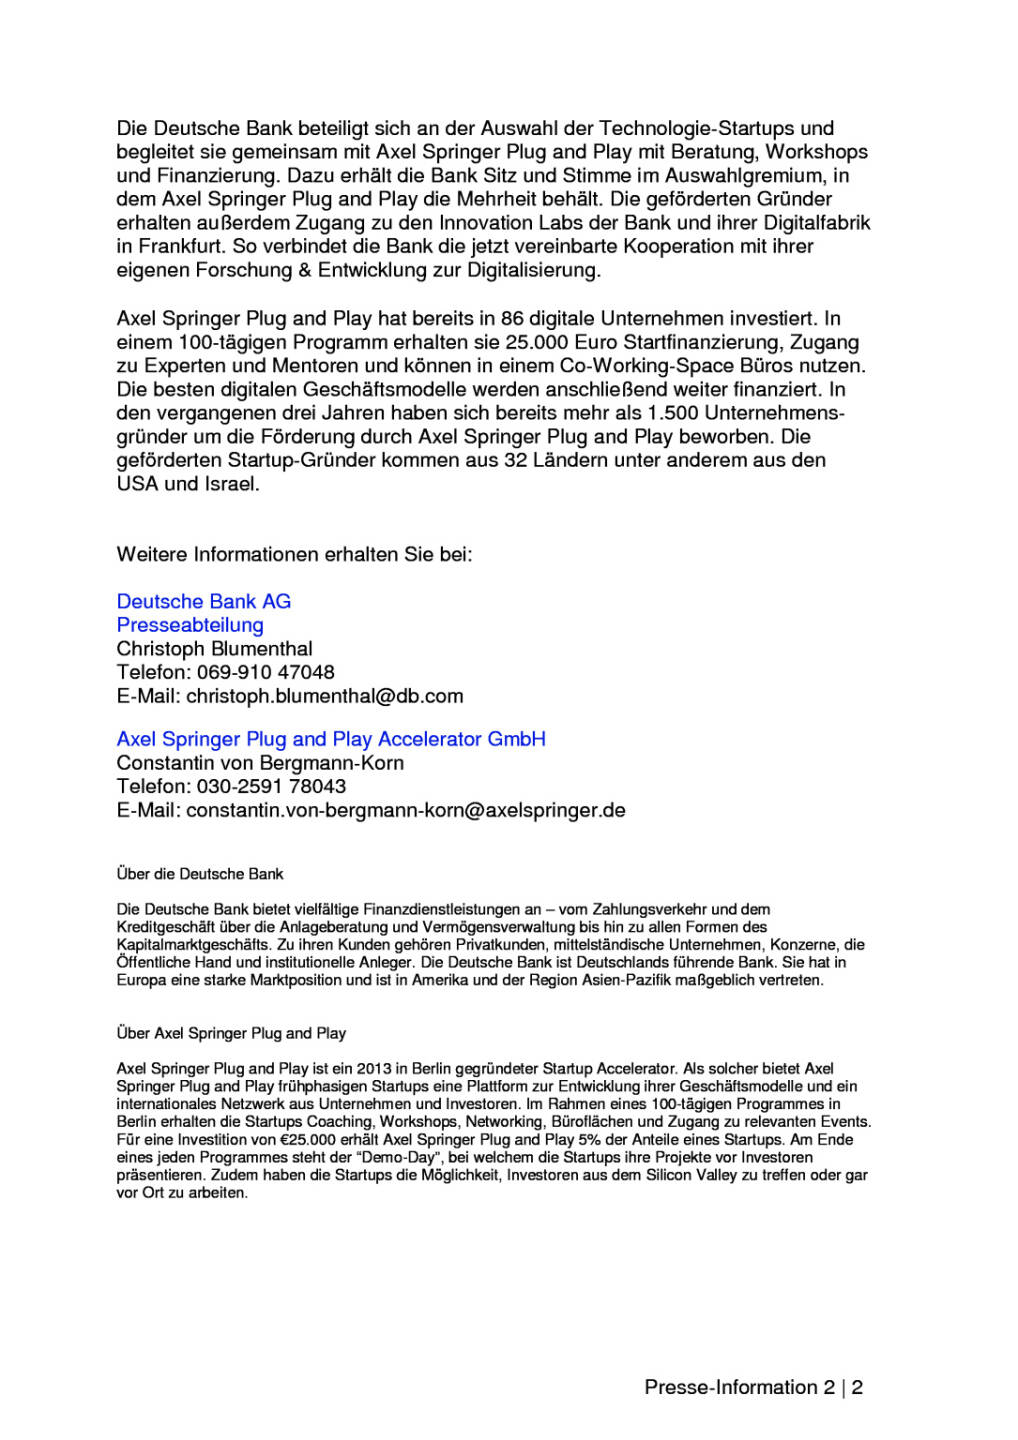 Deutsche Bank: Kooperation mit Axel Springer Plug and Play, Seite 2/2, komplettes Dokument unter http://boerse-social.com/static/uploads/file_1791_deutsche_bank_kooperation_mit_axel_springer_plug_and_play.pdf